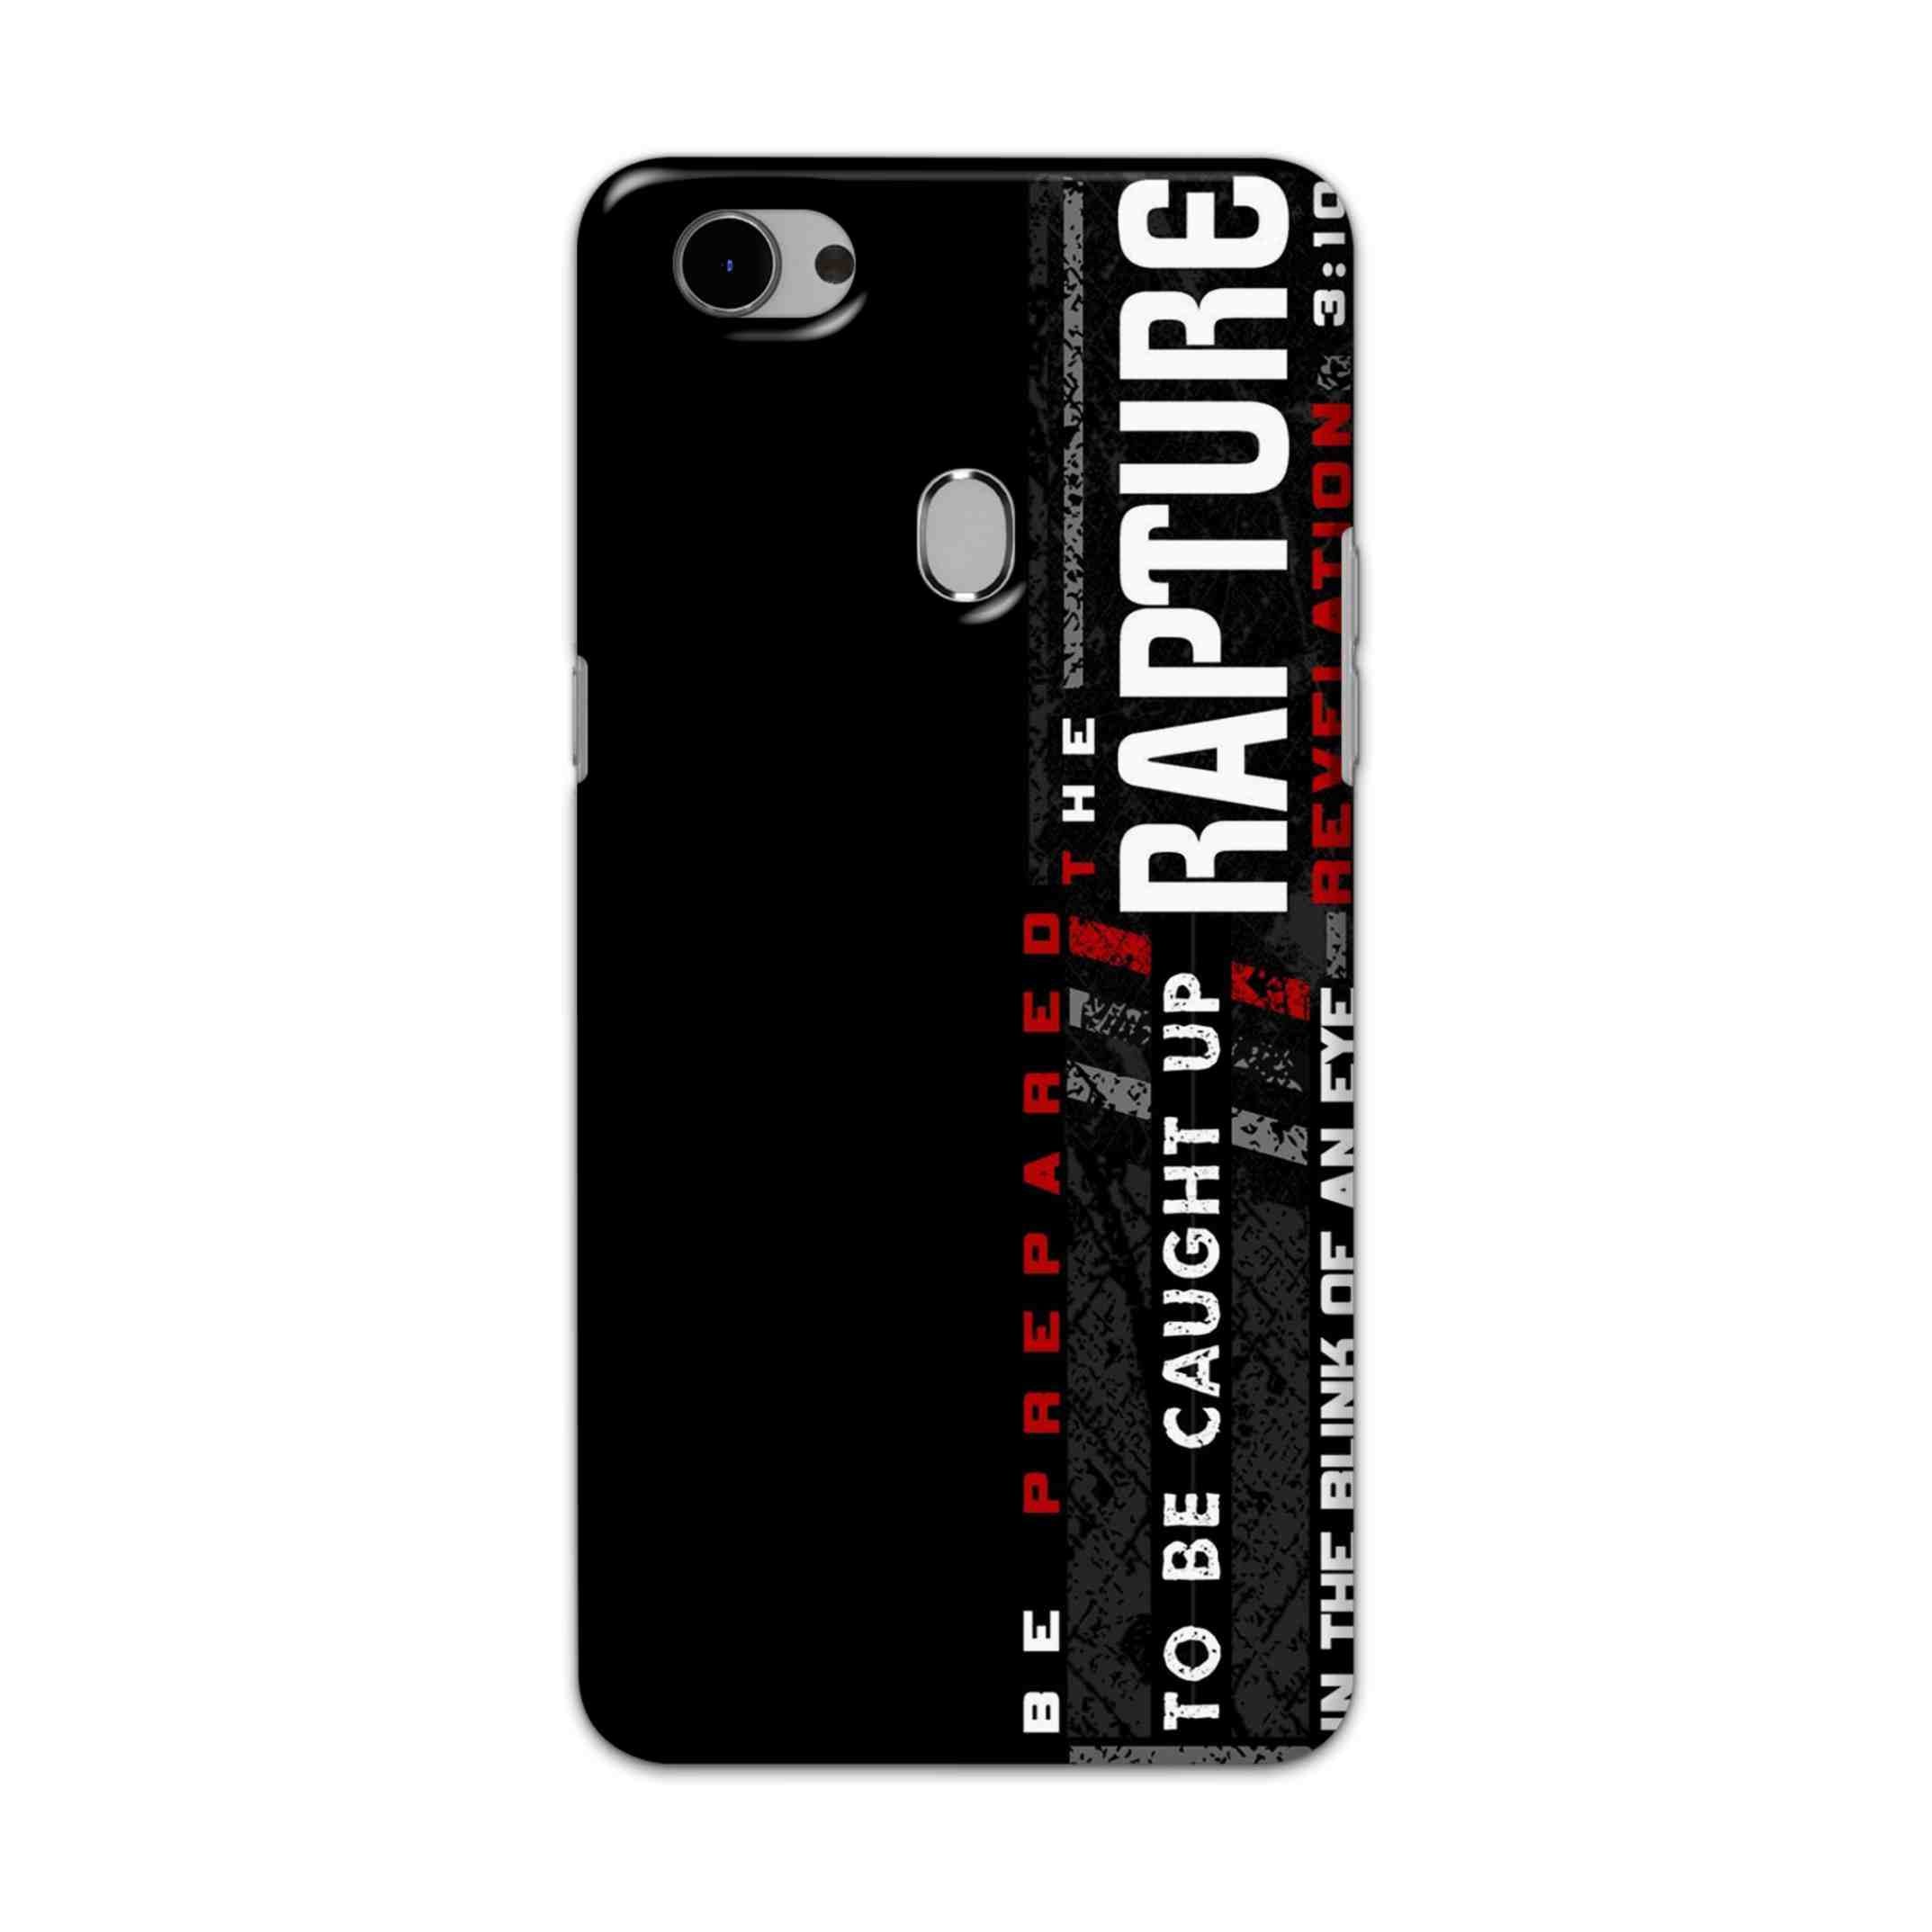 Buy Rapture Hard Back Mobile Phone Case Cover For Oppo F7 Online